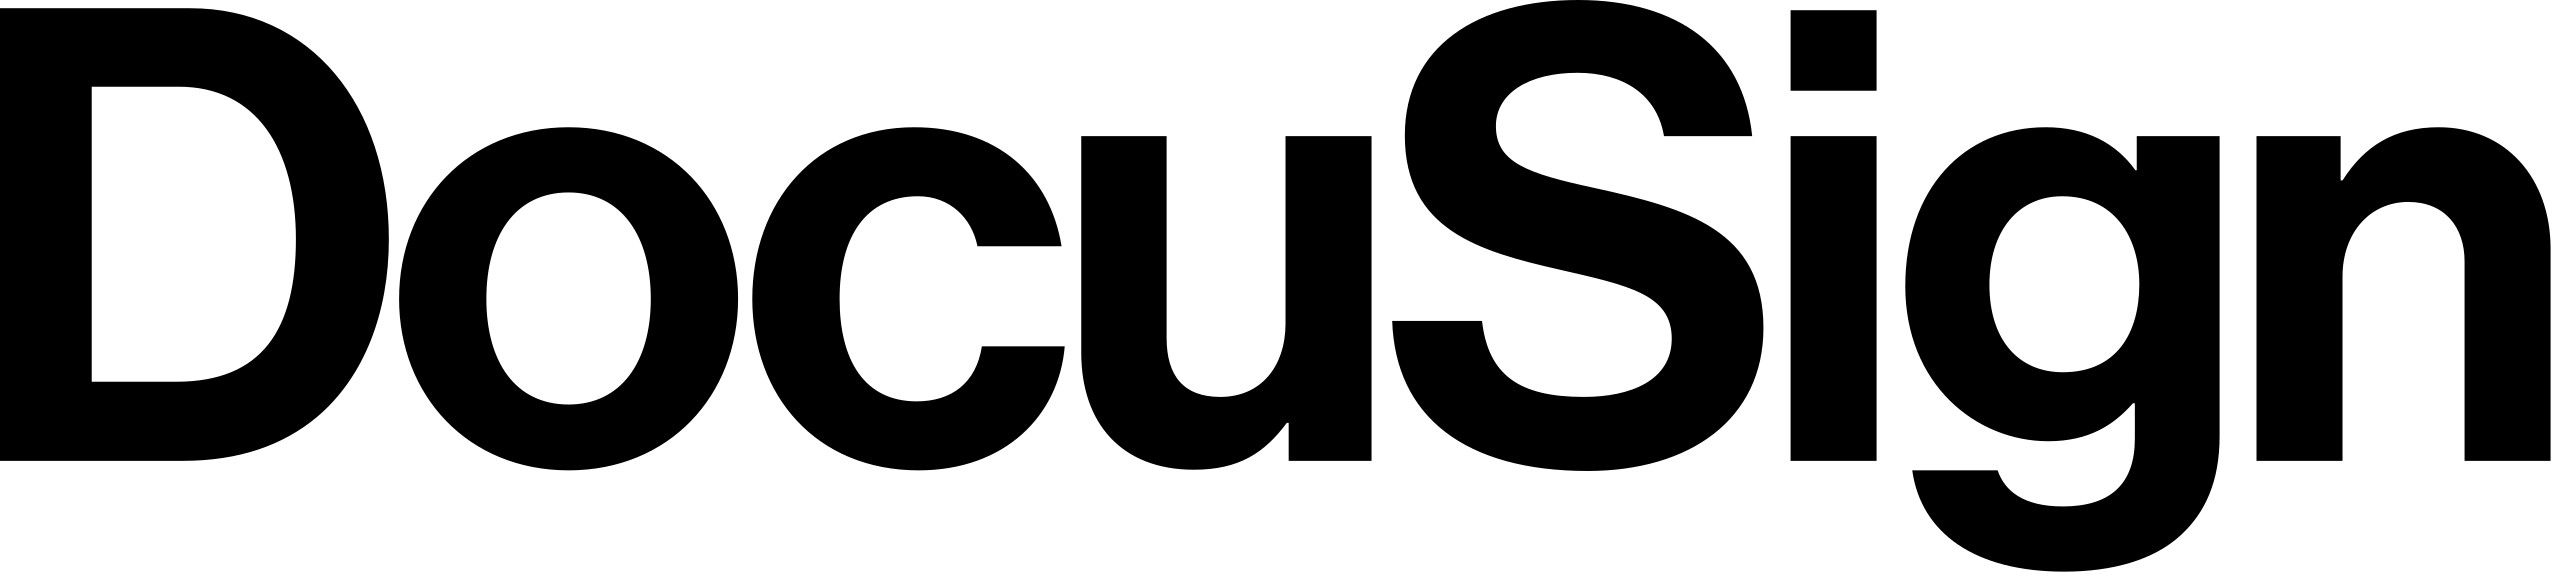 Logotipo de DocuSign